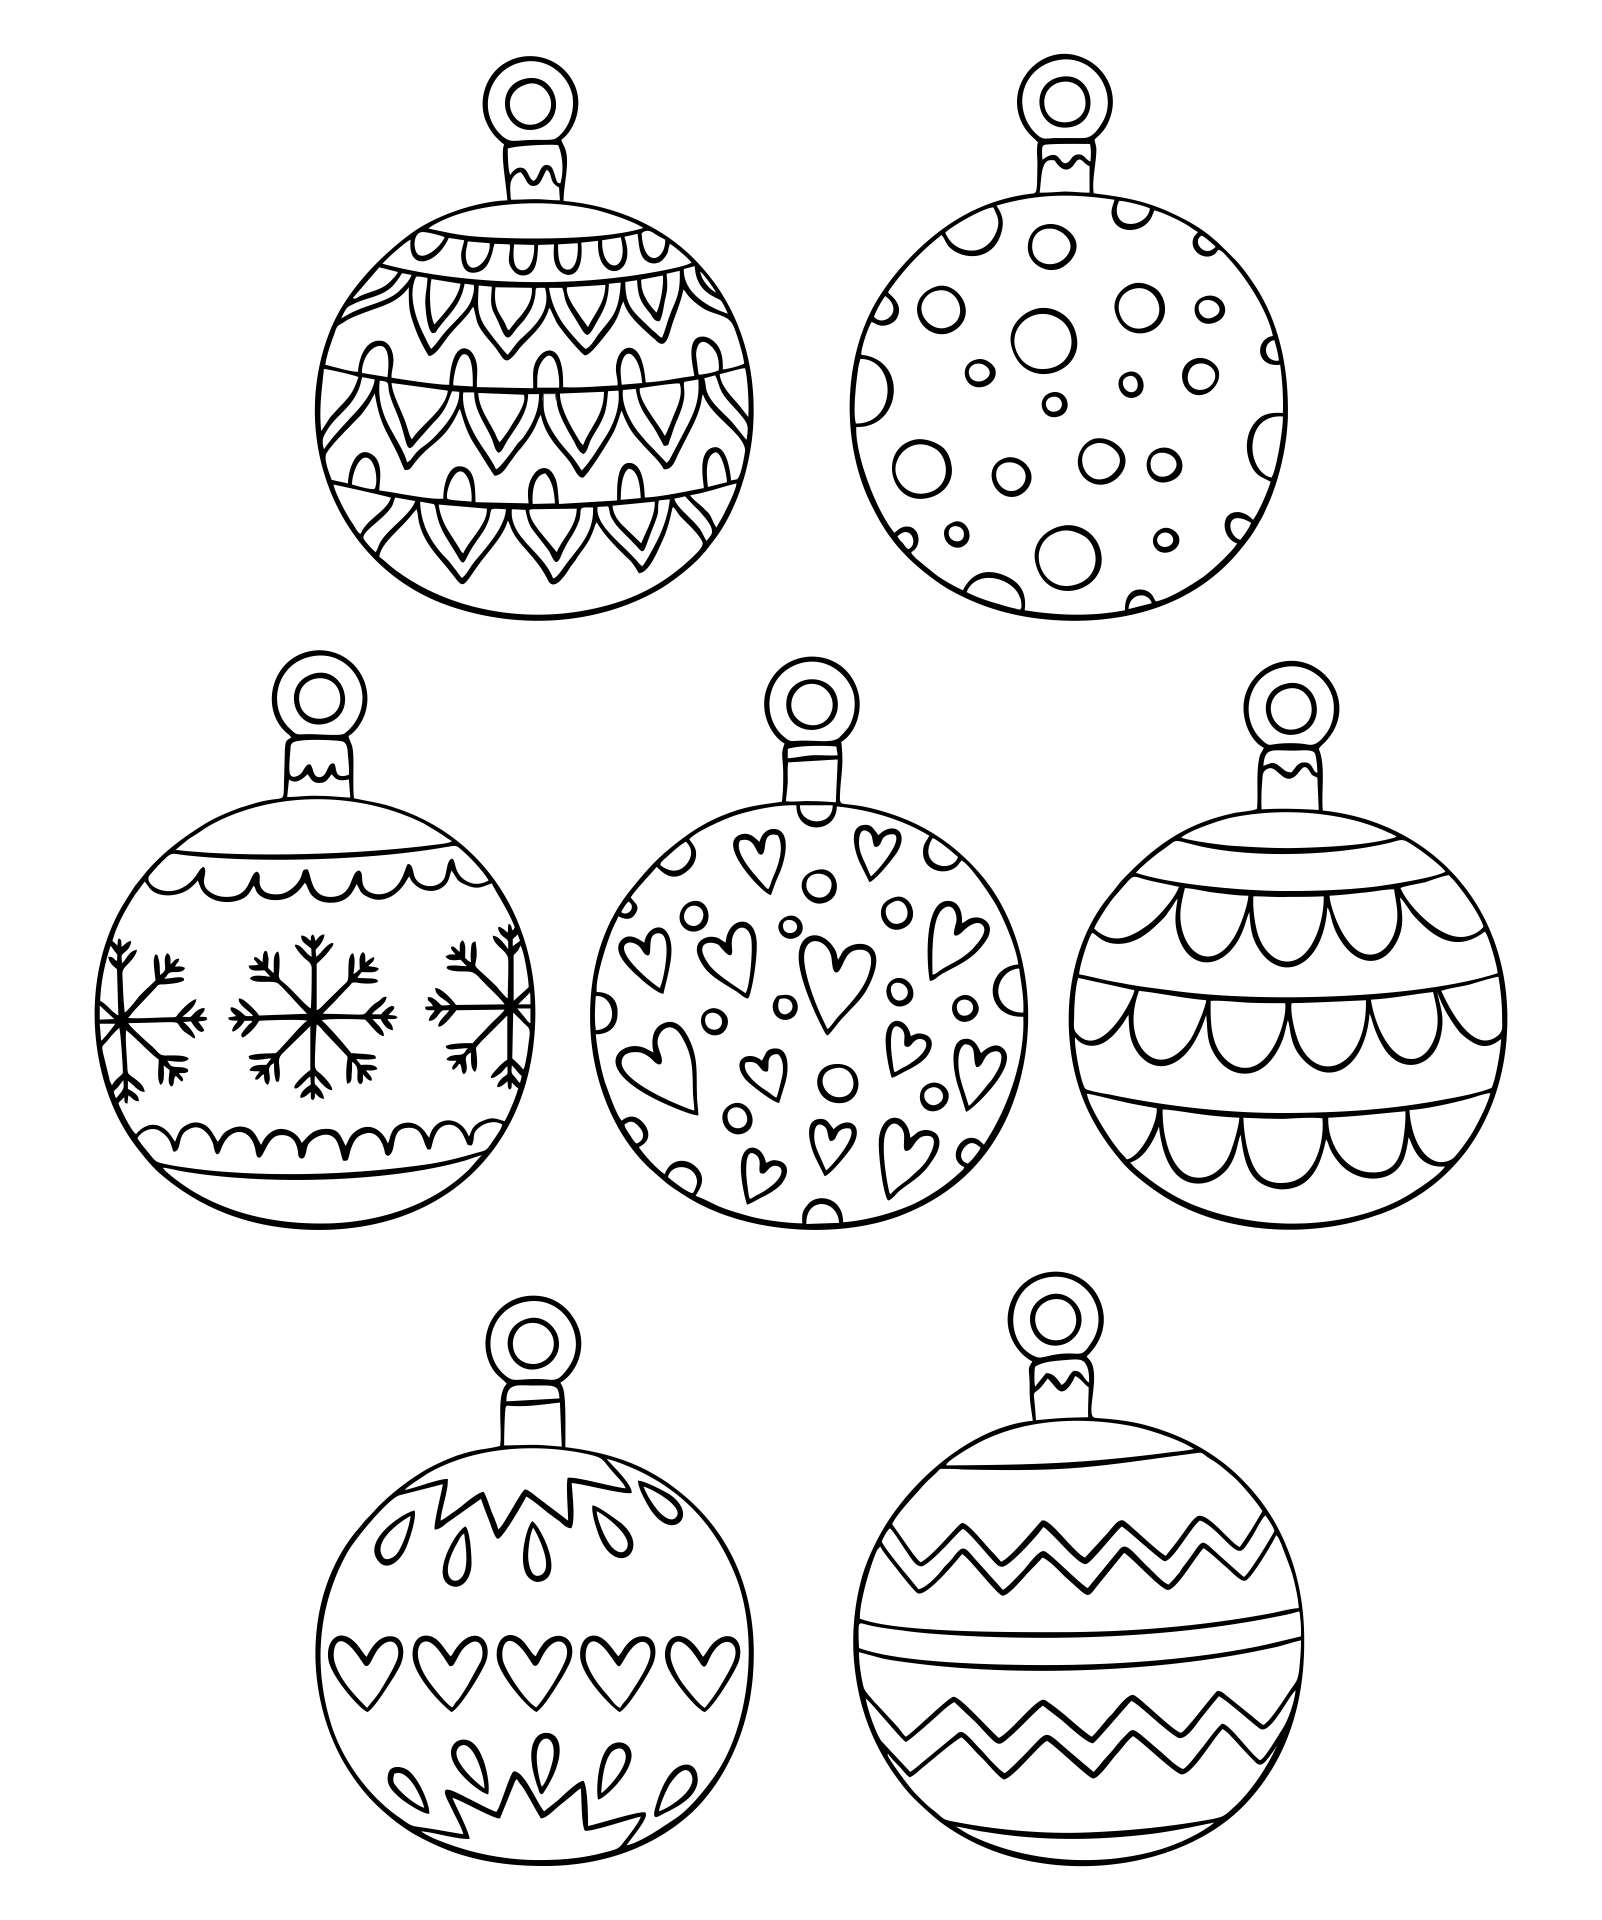 printable-christmas-ornaments-coloring-pages-cakrawalanews